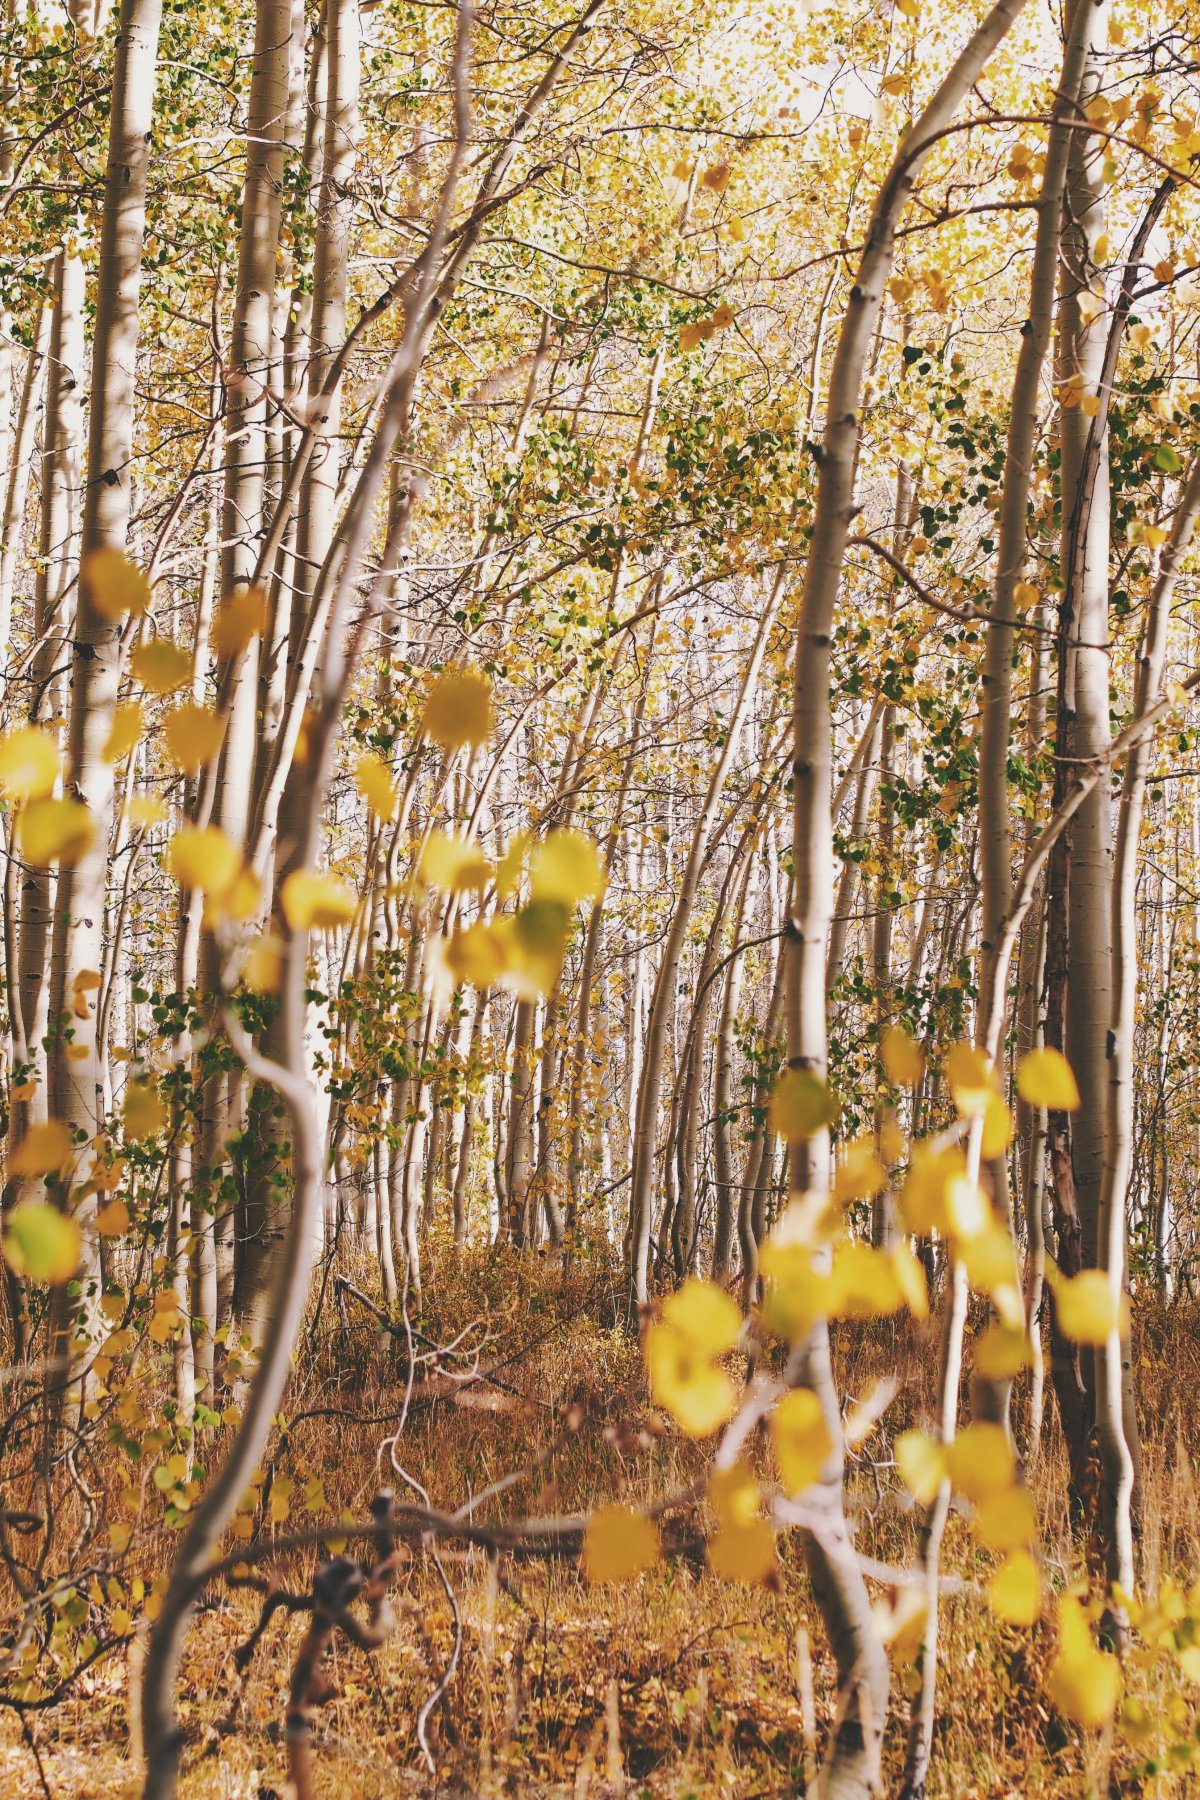 Autumn forest pictures appreciation